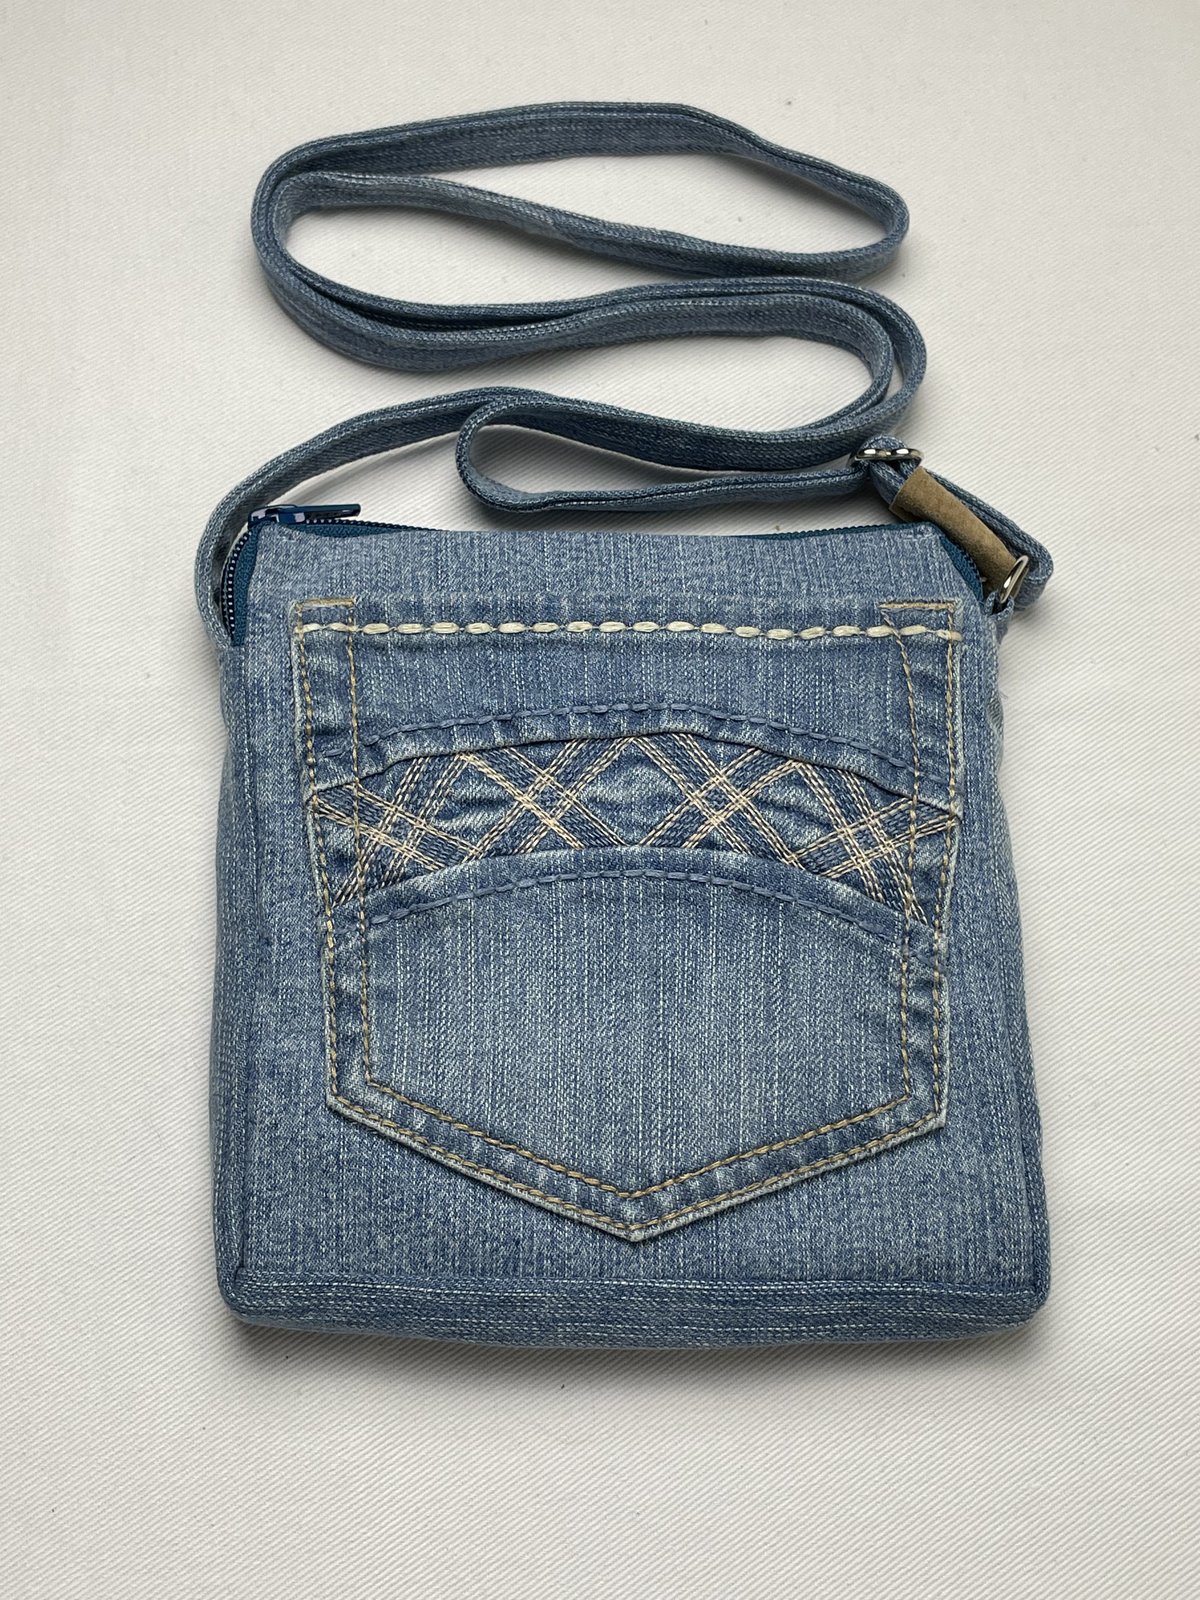 Craftsy Style Tailor - Upcycled Denim Tote Bag | Handmade Blue Jean Purse  Order here https://www.etsy.com/listing/1395197868/upcycled-denim-tote-bag-handmade-blue  #UpcycledDenimLevis #ReclaimedDenimTote #HandmadeDenimBag #LevisHandbag ...